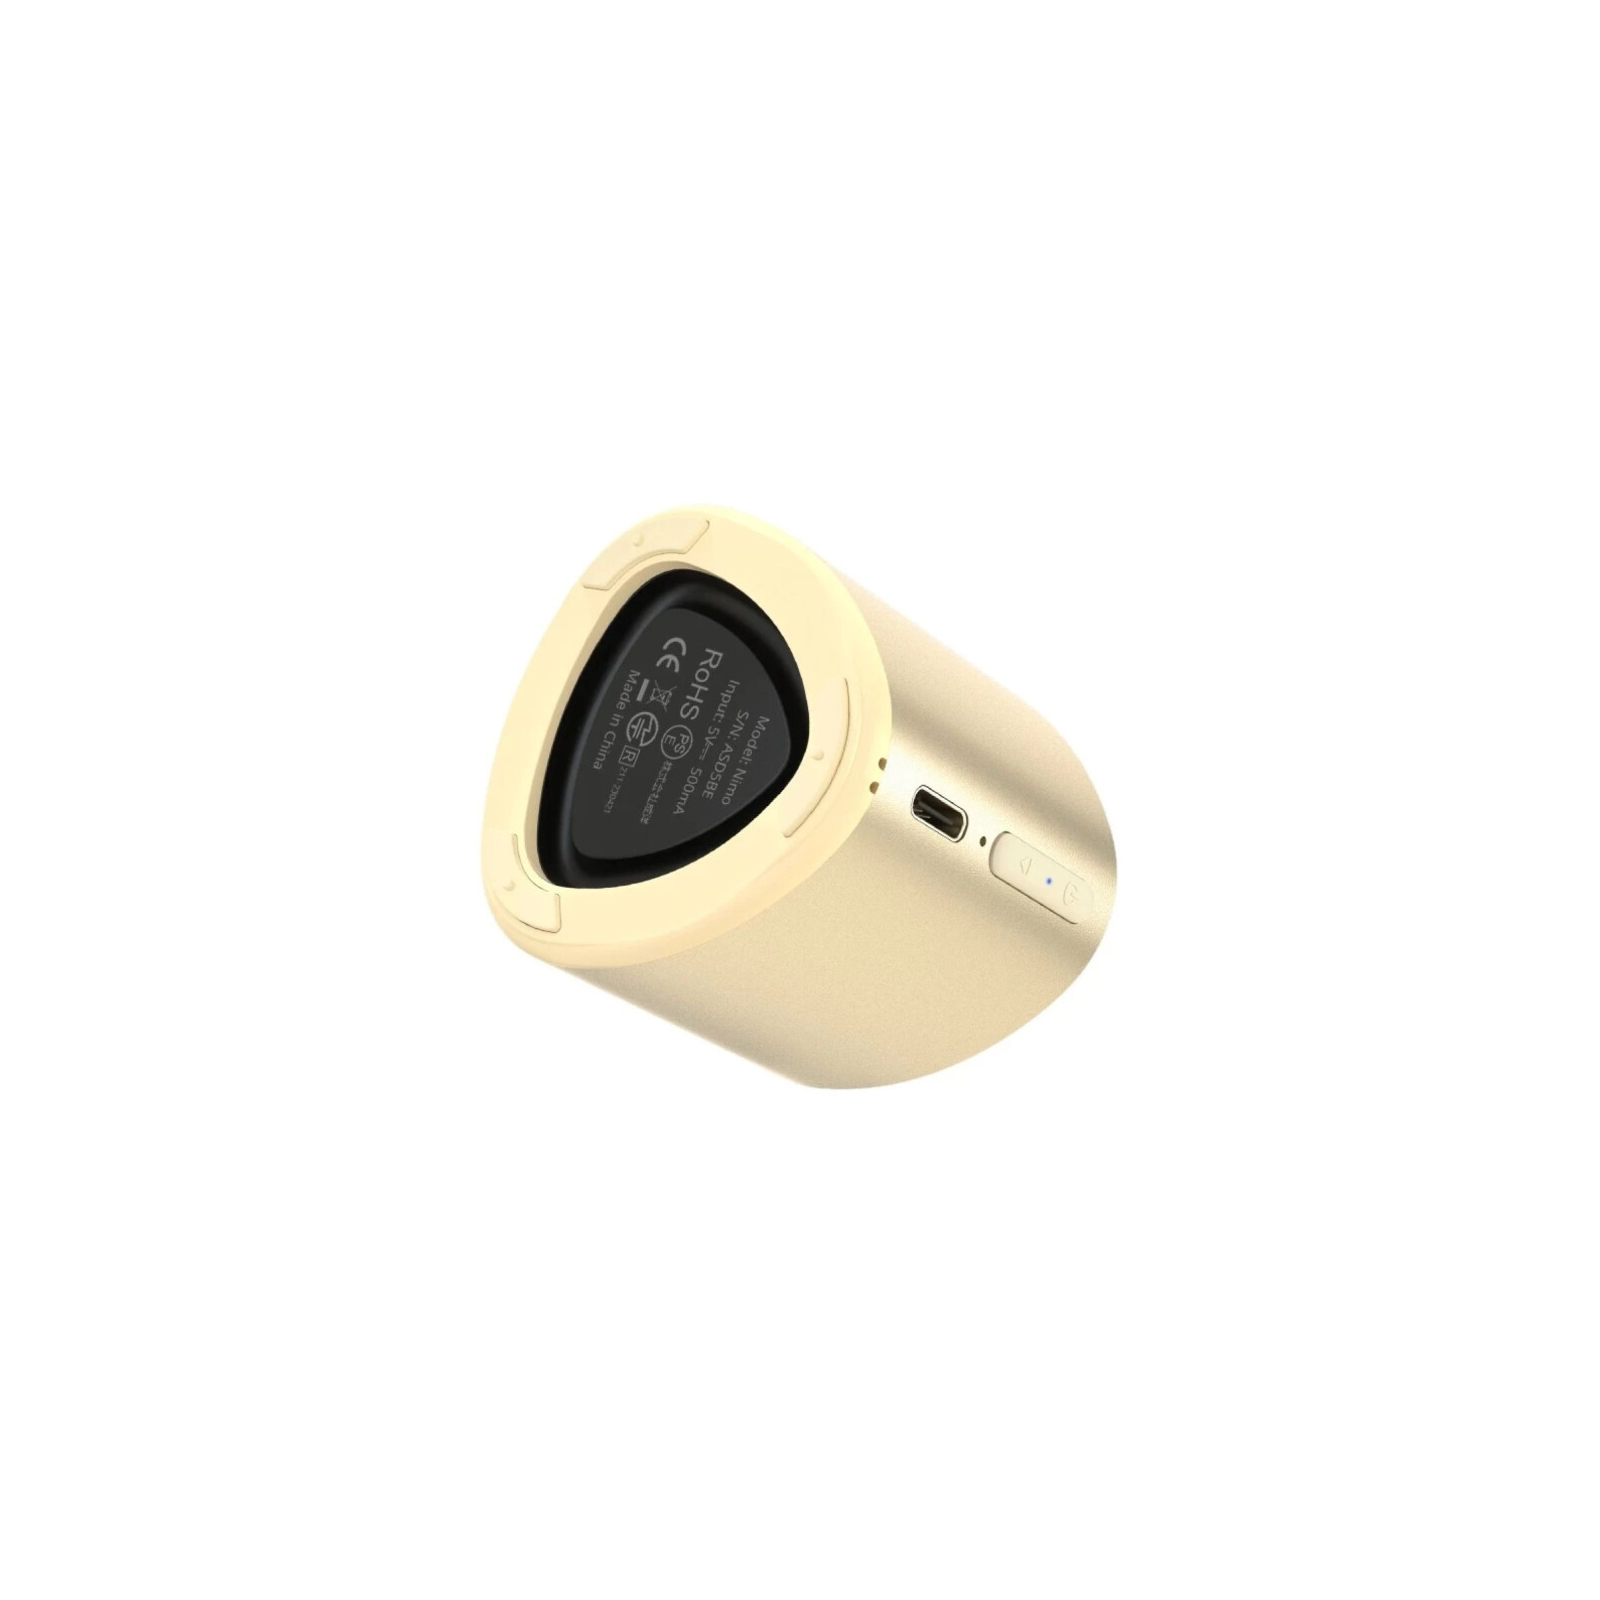 Акустична система Tronsmart Nimo Mini Speaker Purple (985910) зображення 4